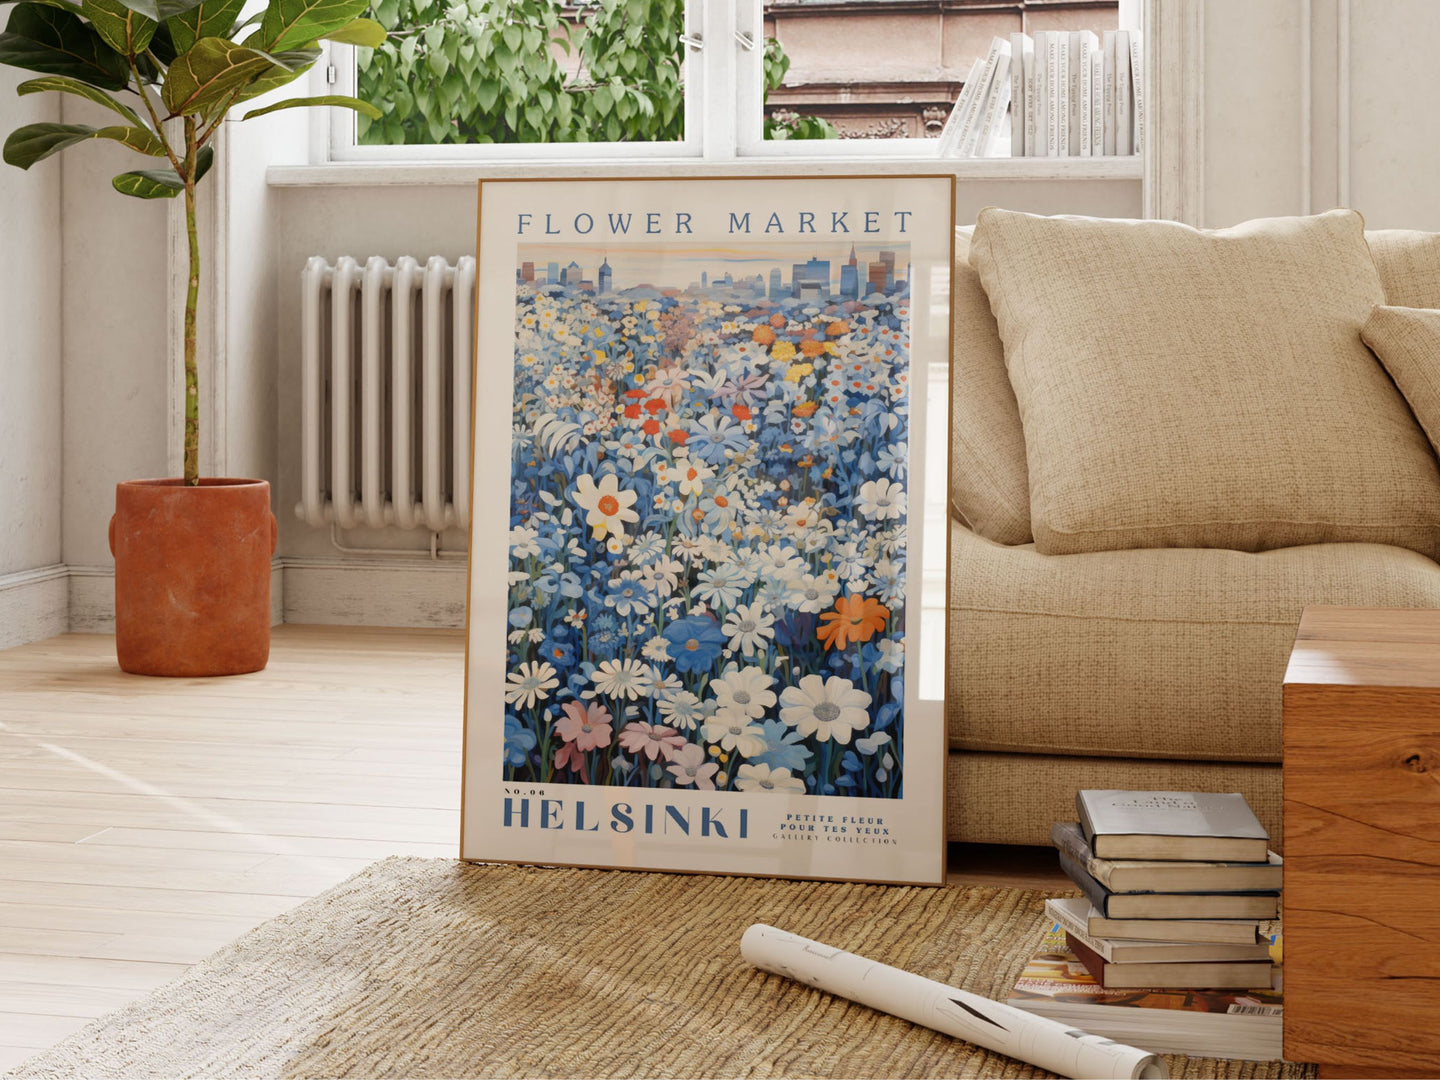 Helsinki Flower Market Poster, Helsinki Wall Art, Blue Marguerite Daisy Art, Blue Flowers Wall Decor, City Skyline, Finland Travel Art